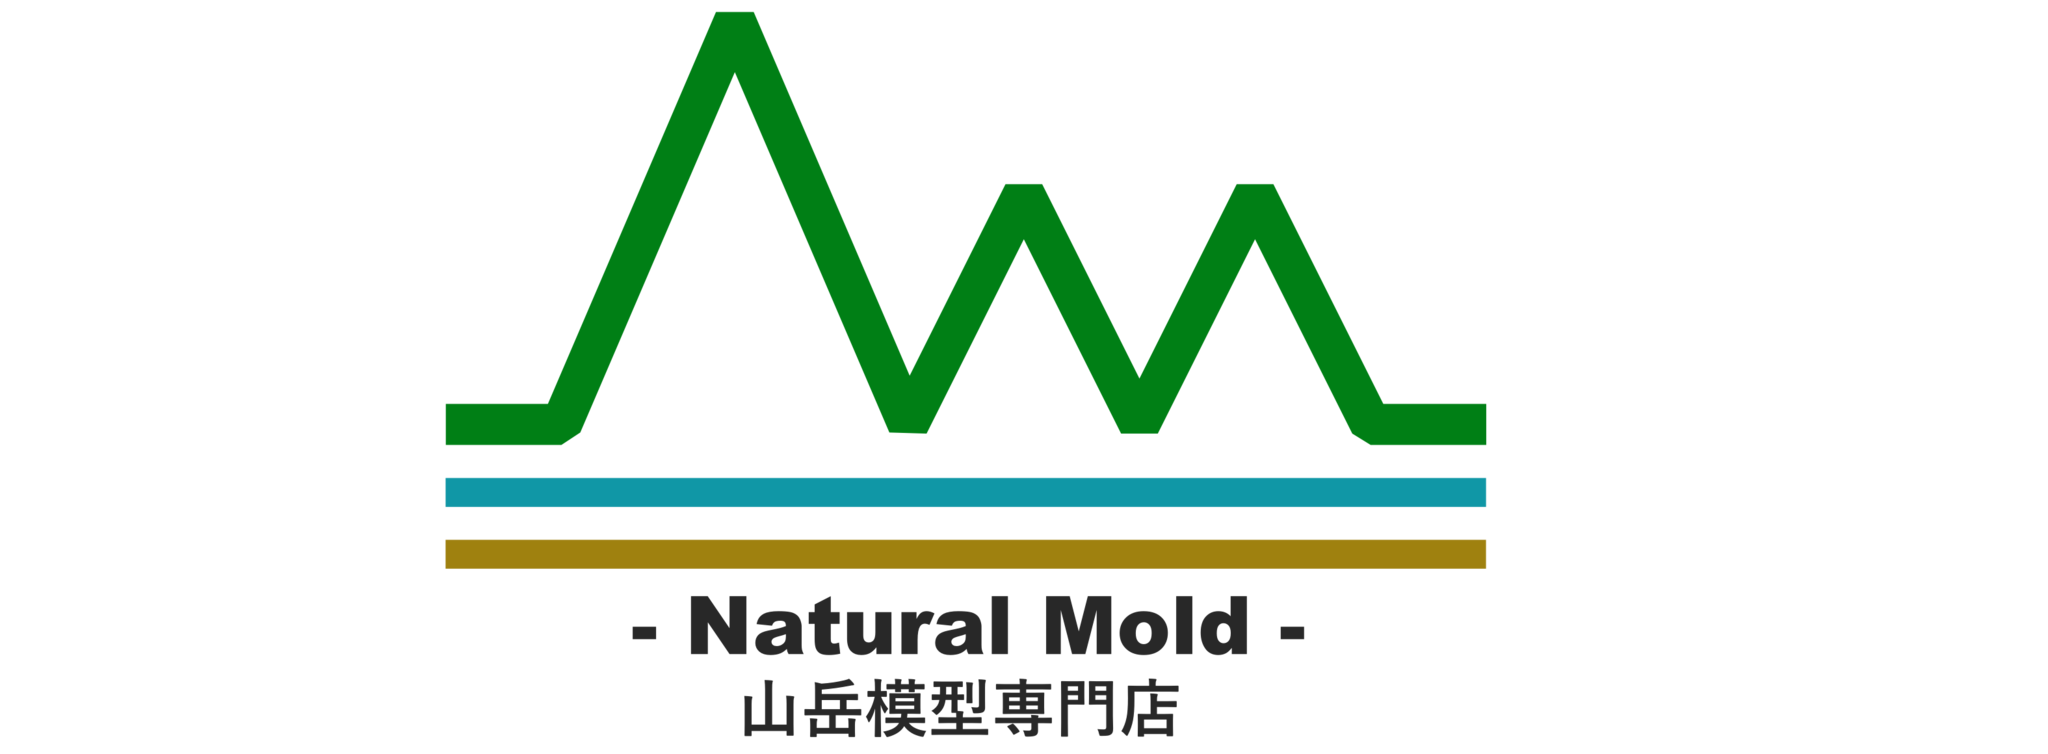 natural mold 山岳模型専門店